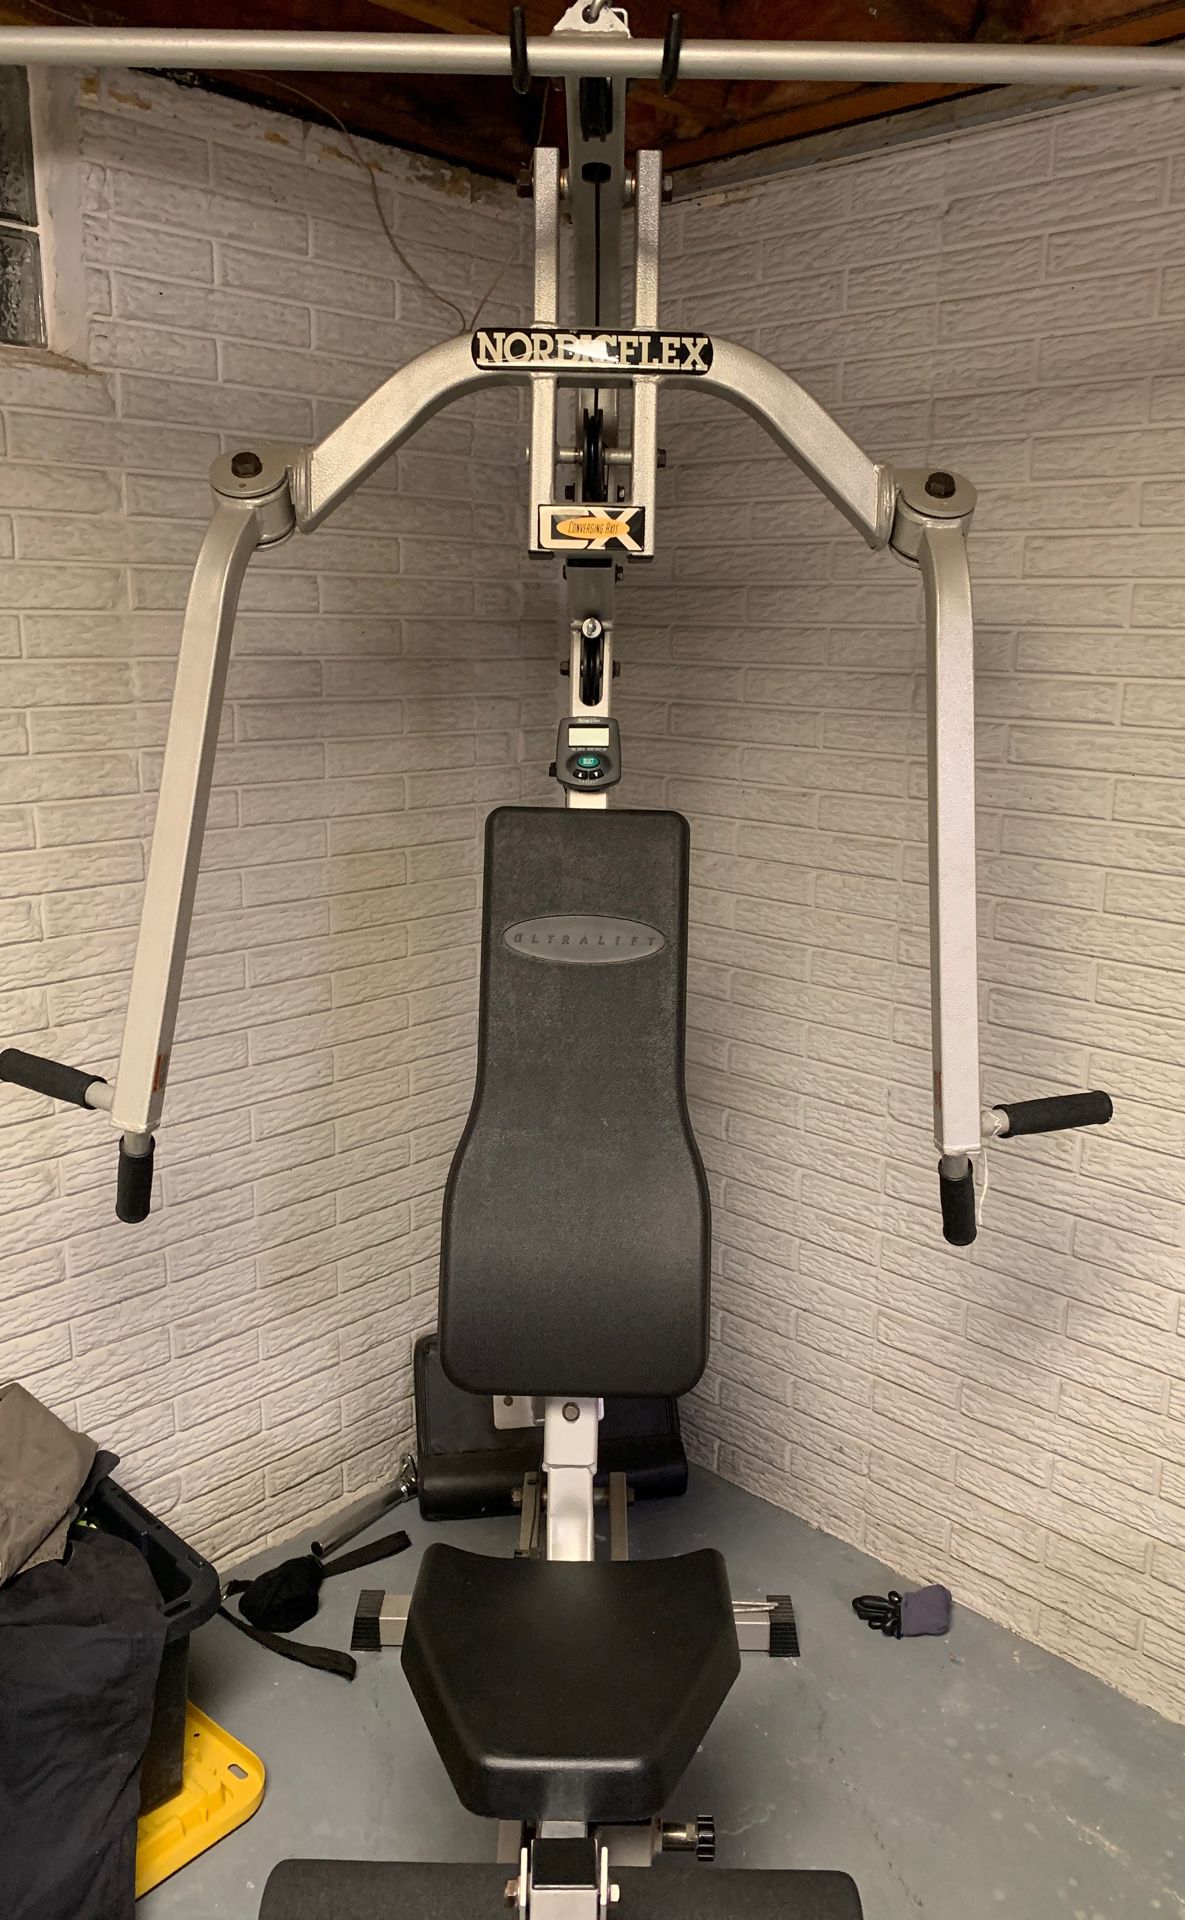 Nordic Flex CX full body workout machine